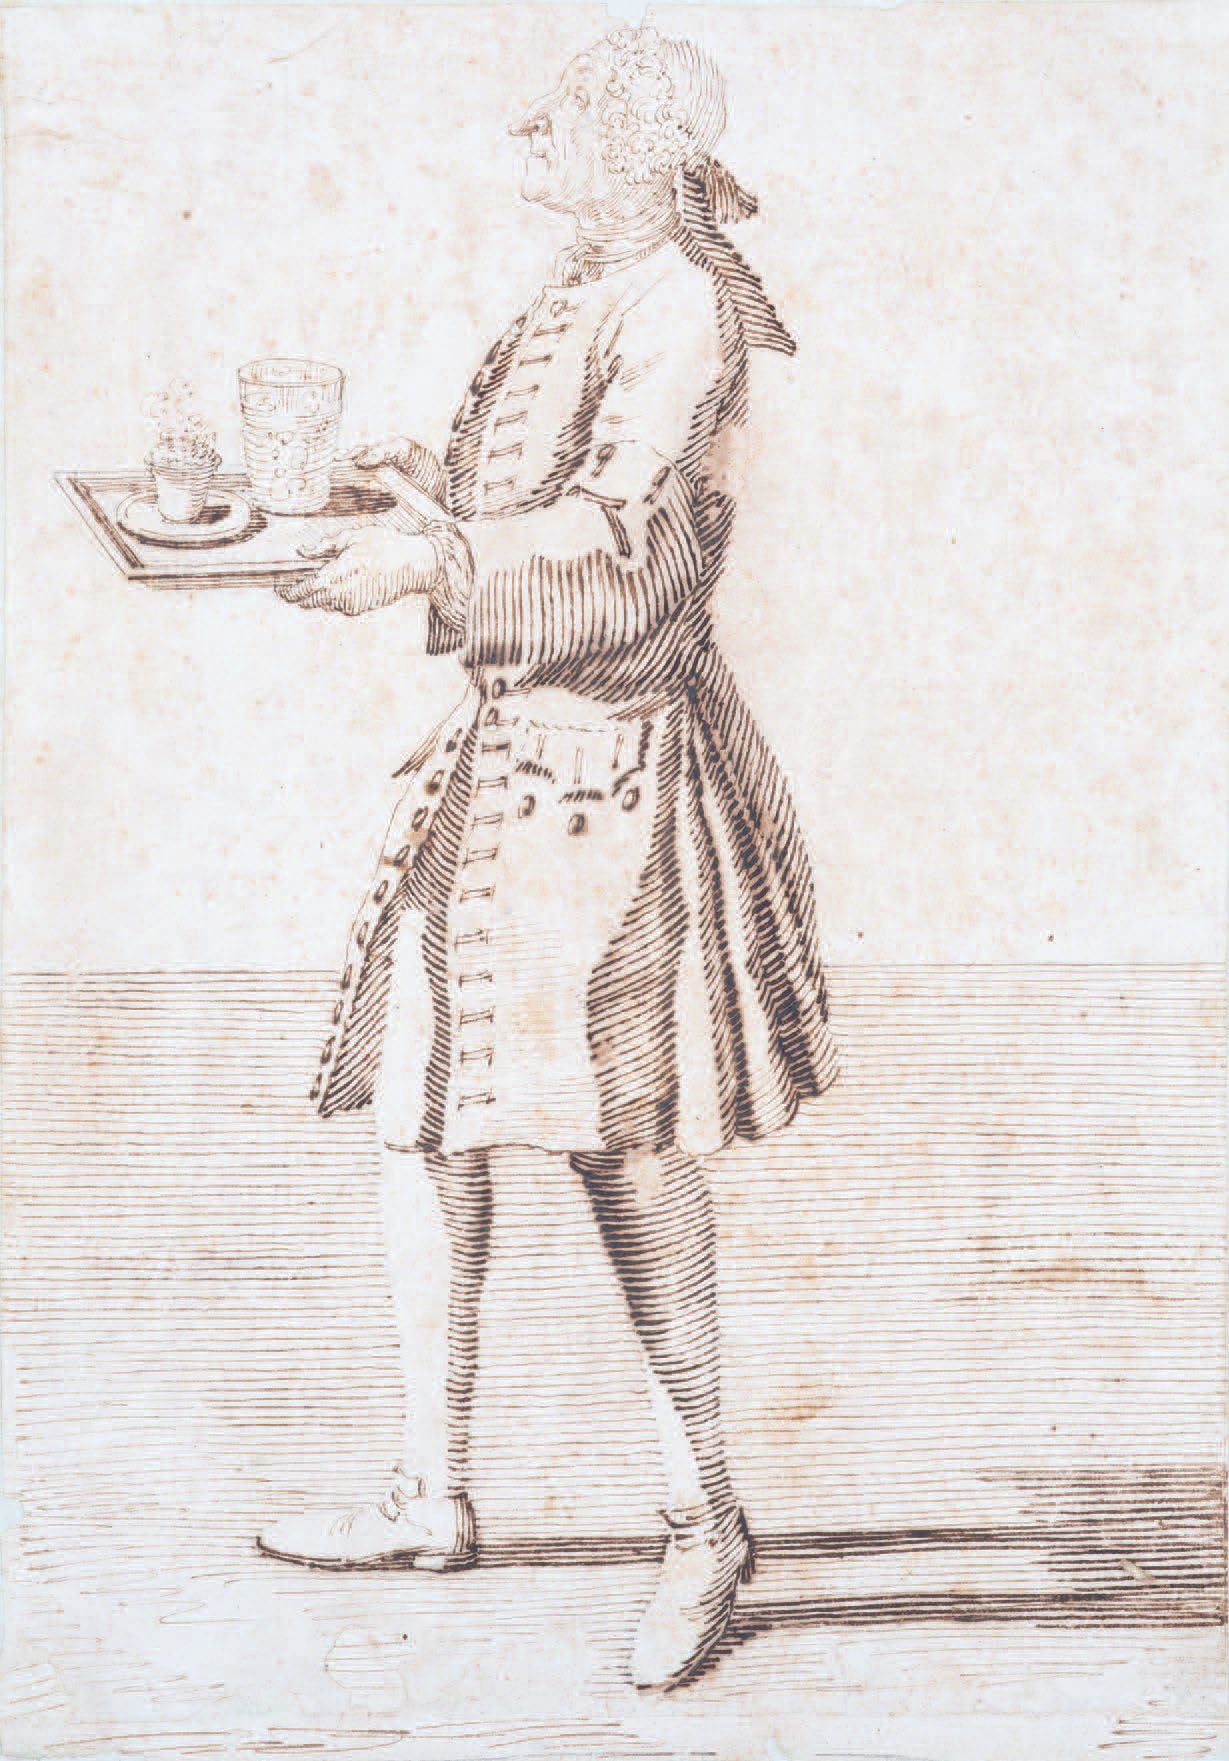 Pier Leone Ghezzi (1674-1755) 
Retrato de un hombre con una bandeja, visto de pe&hellip;